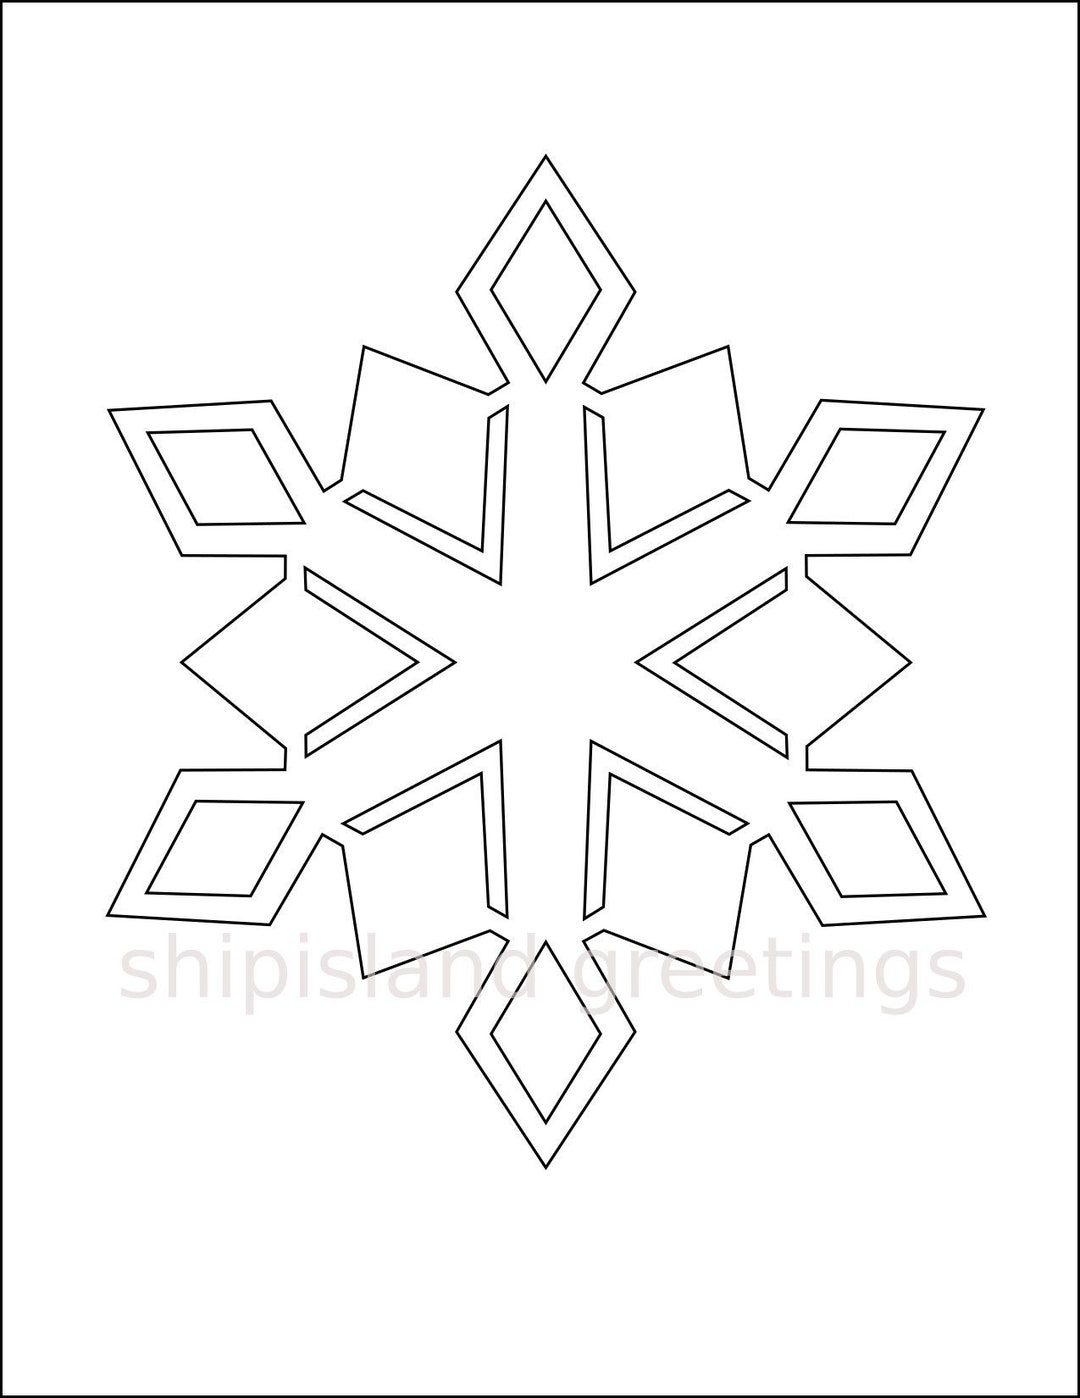 Free Printable Snowflake Templates – 10 Large & Small Stencil Patterns   Snowflake template, Printable snowflake template, Snowflake coloring pages